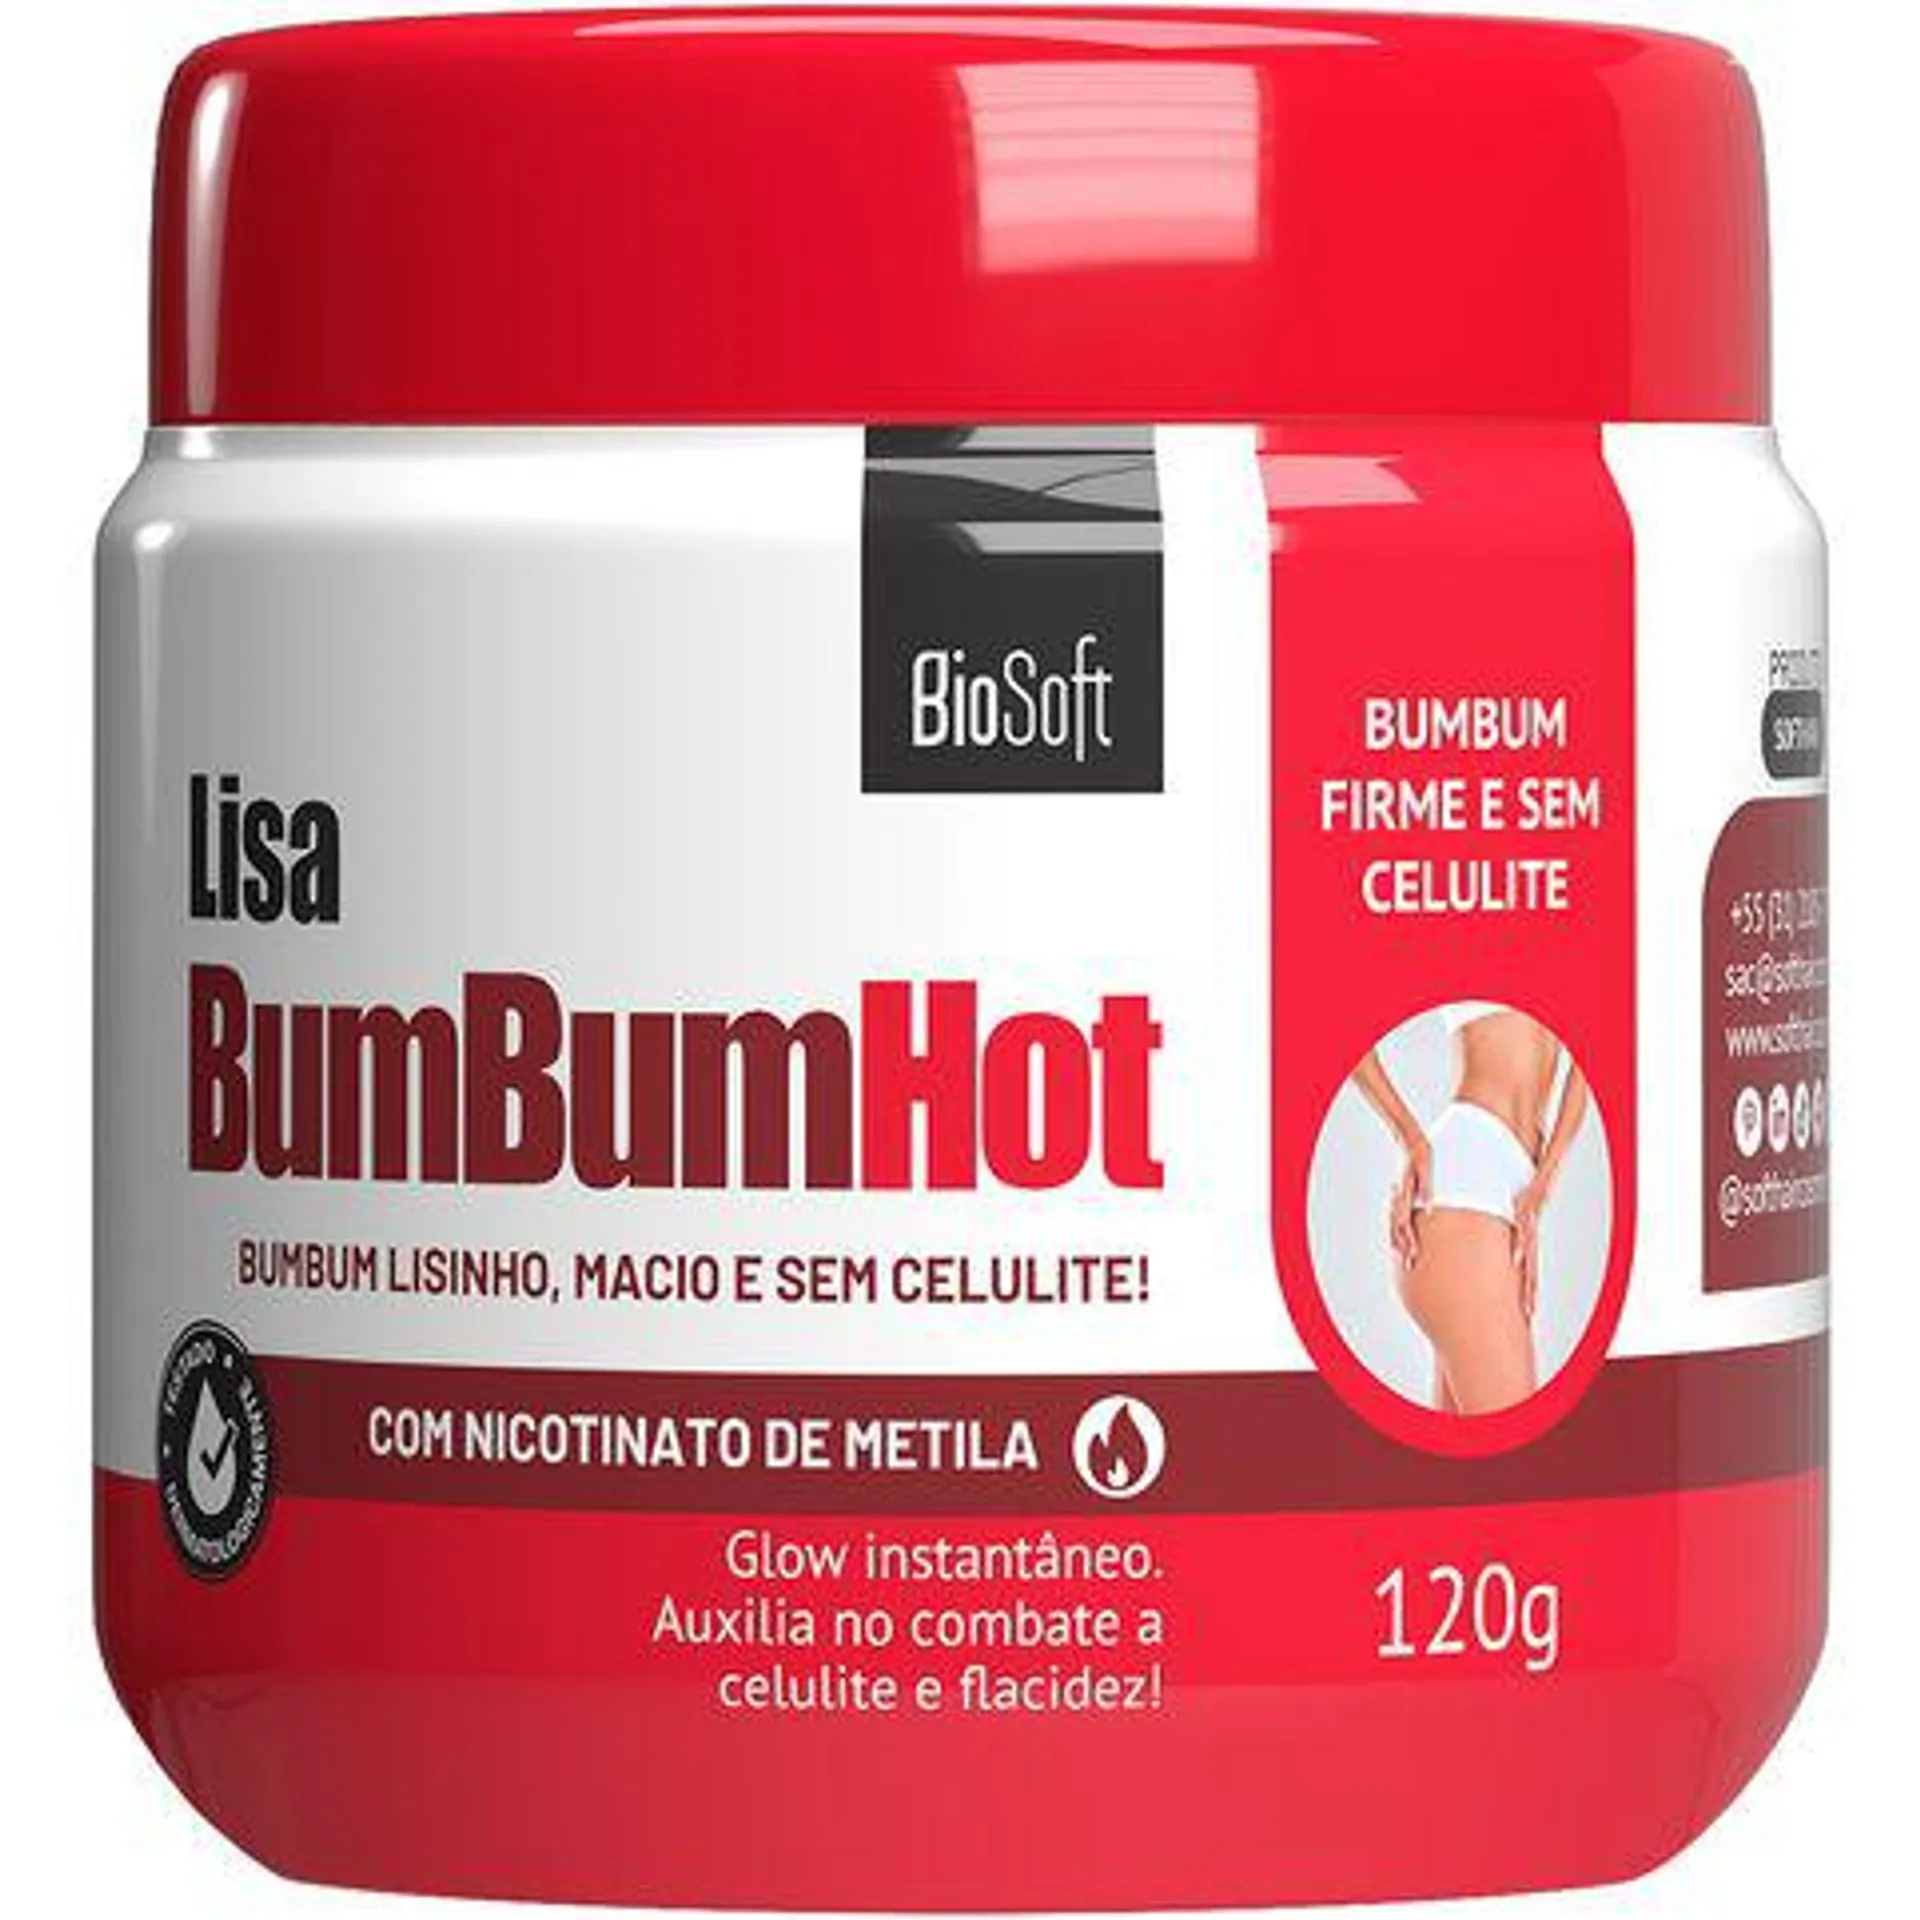 Lisa Bumbum Hot Creme Corporal Bio Soft 120g